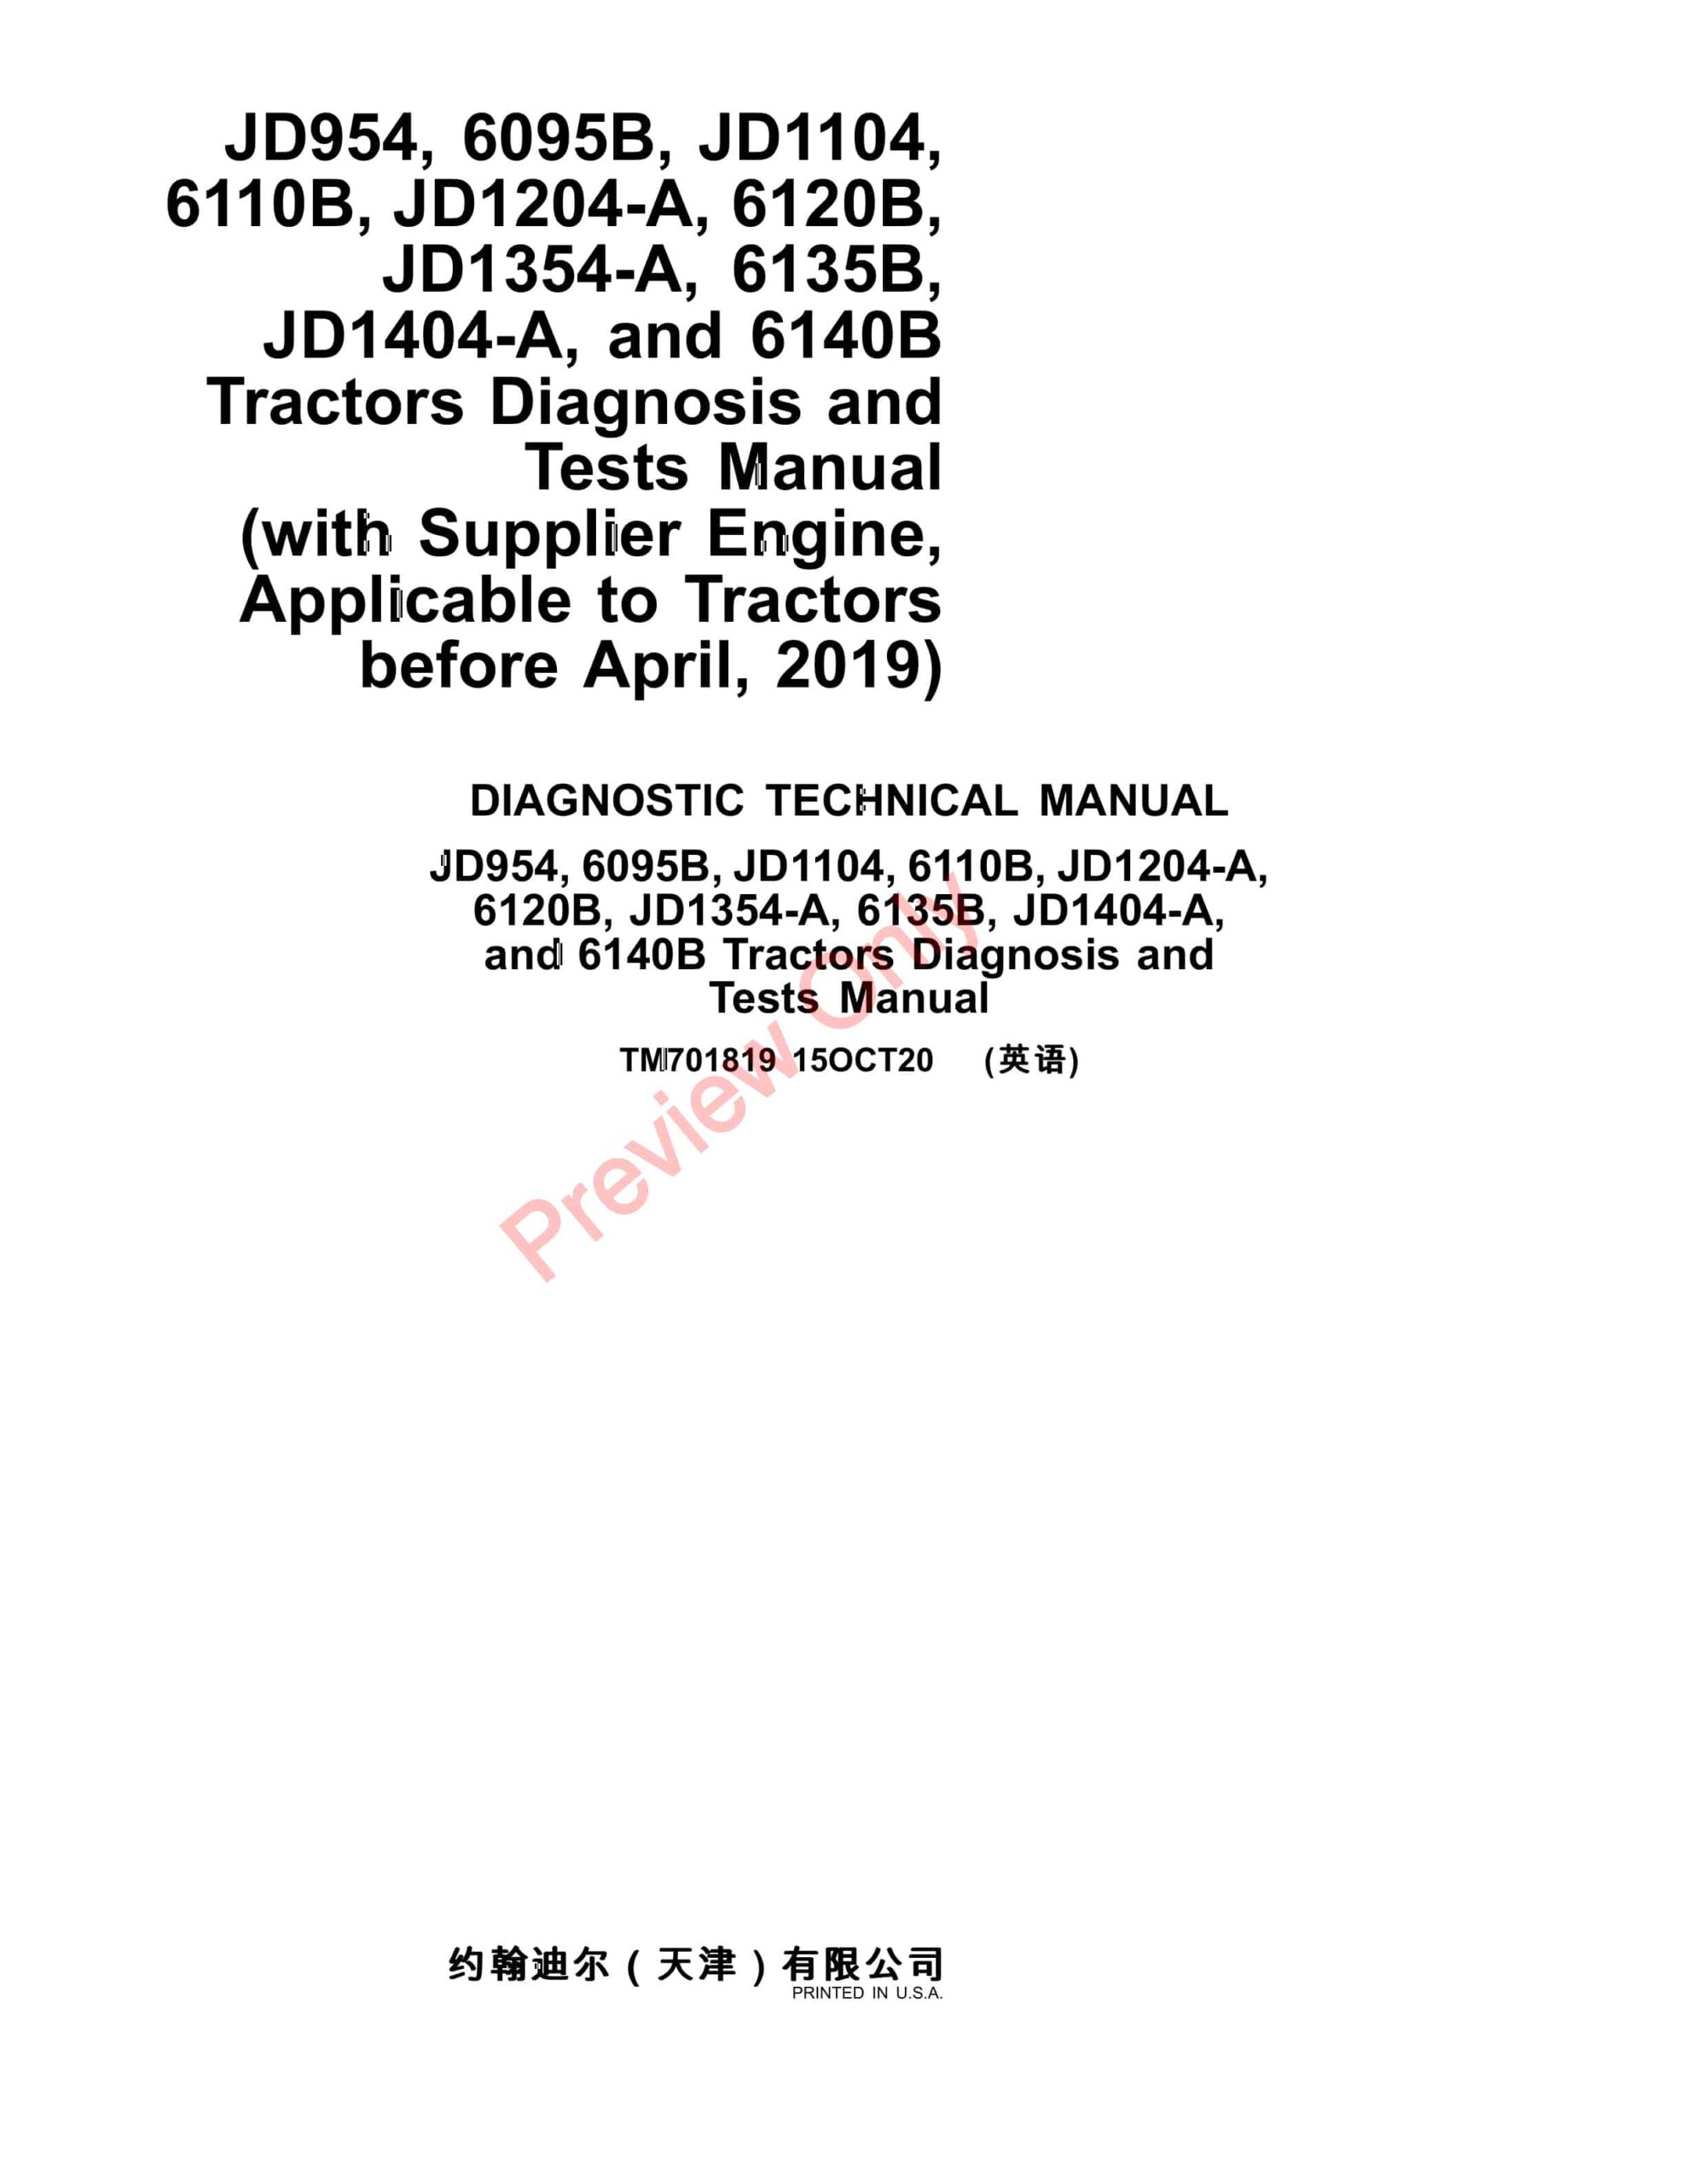 John Deere JD954, 6095B, JD1104, 6110B, JD1204 Diagnostic Technical Manual TM701819 15OCT20-1